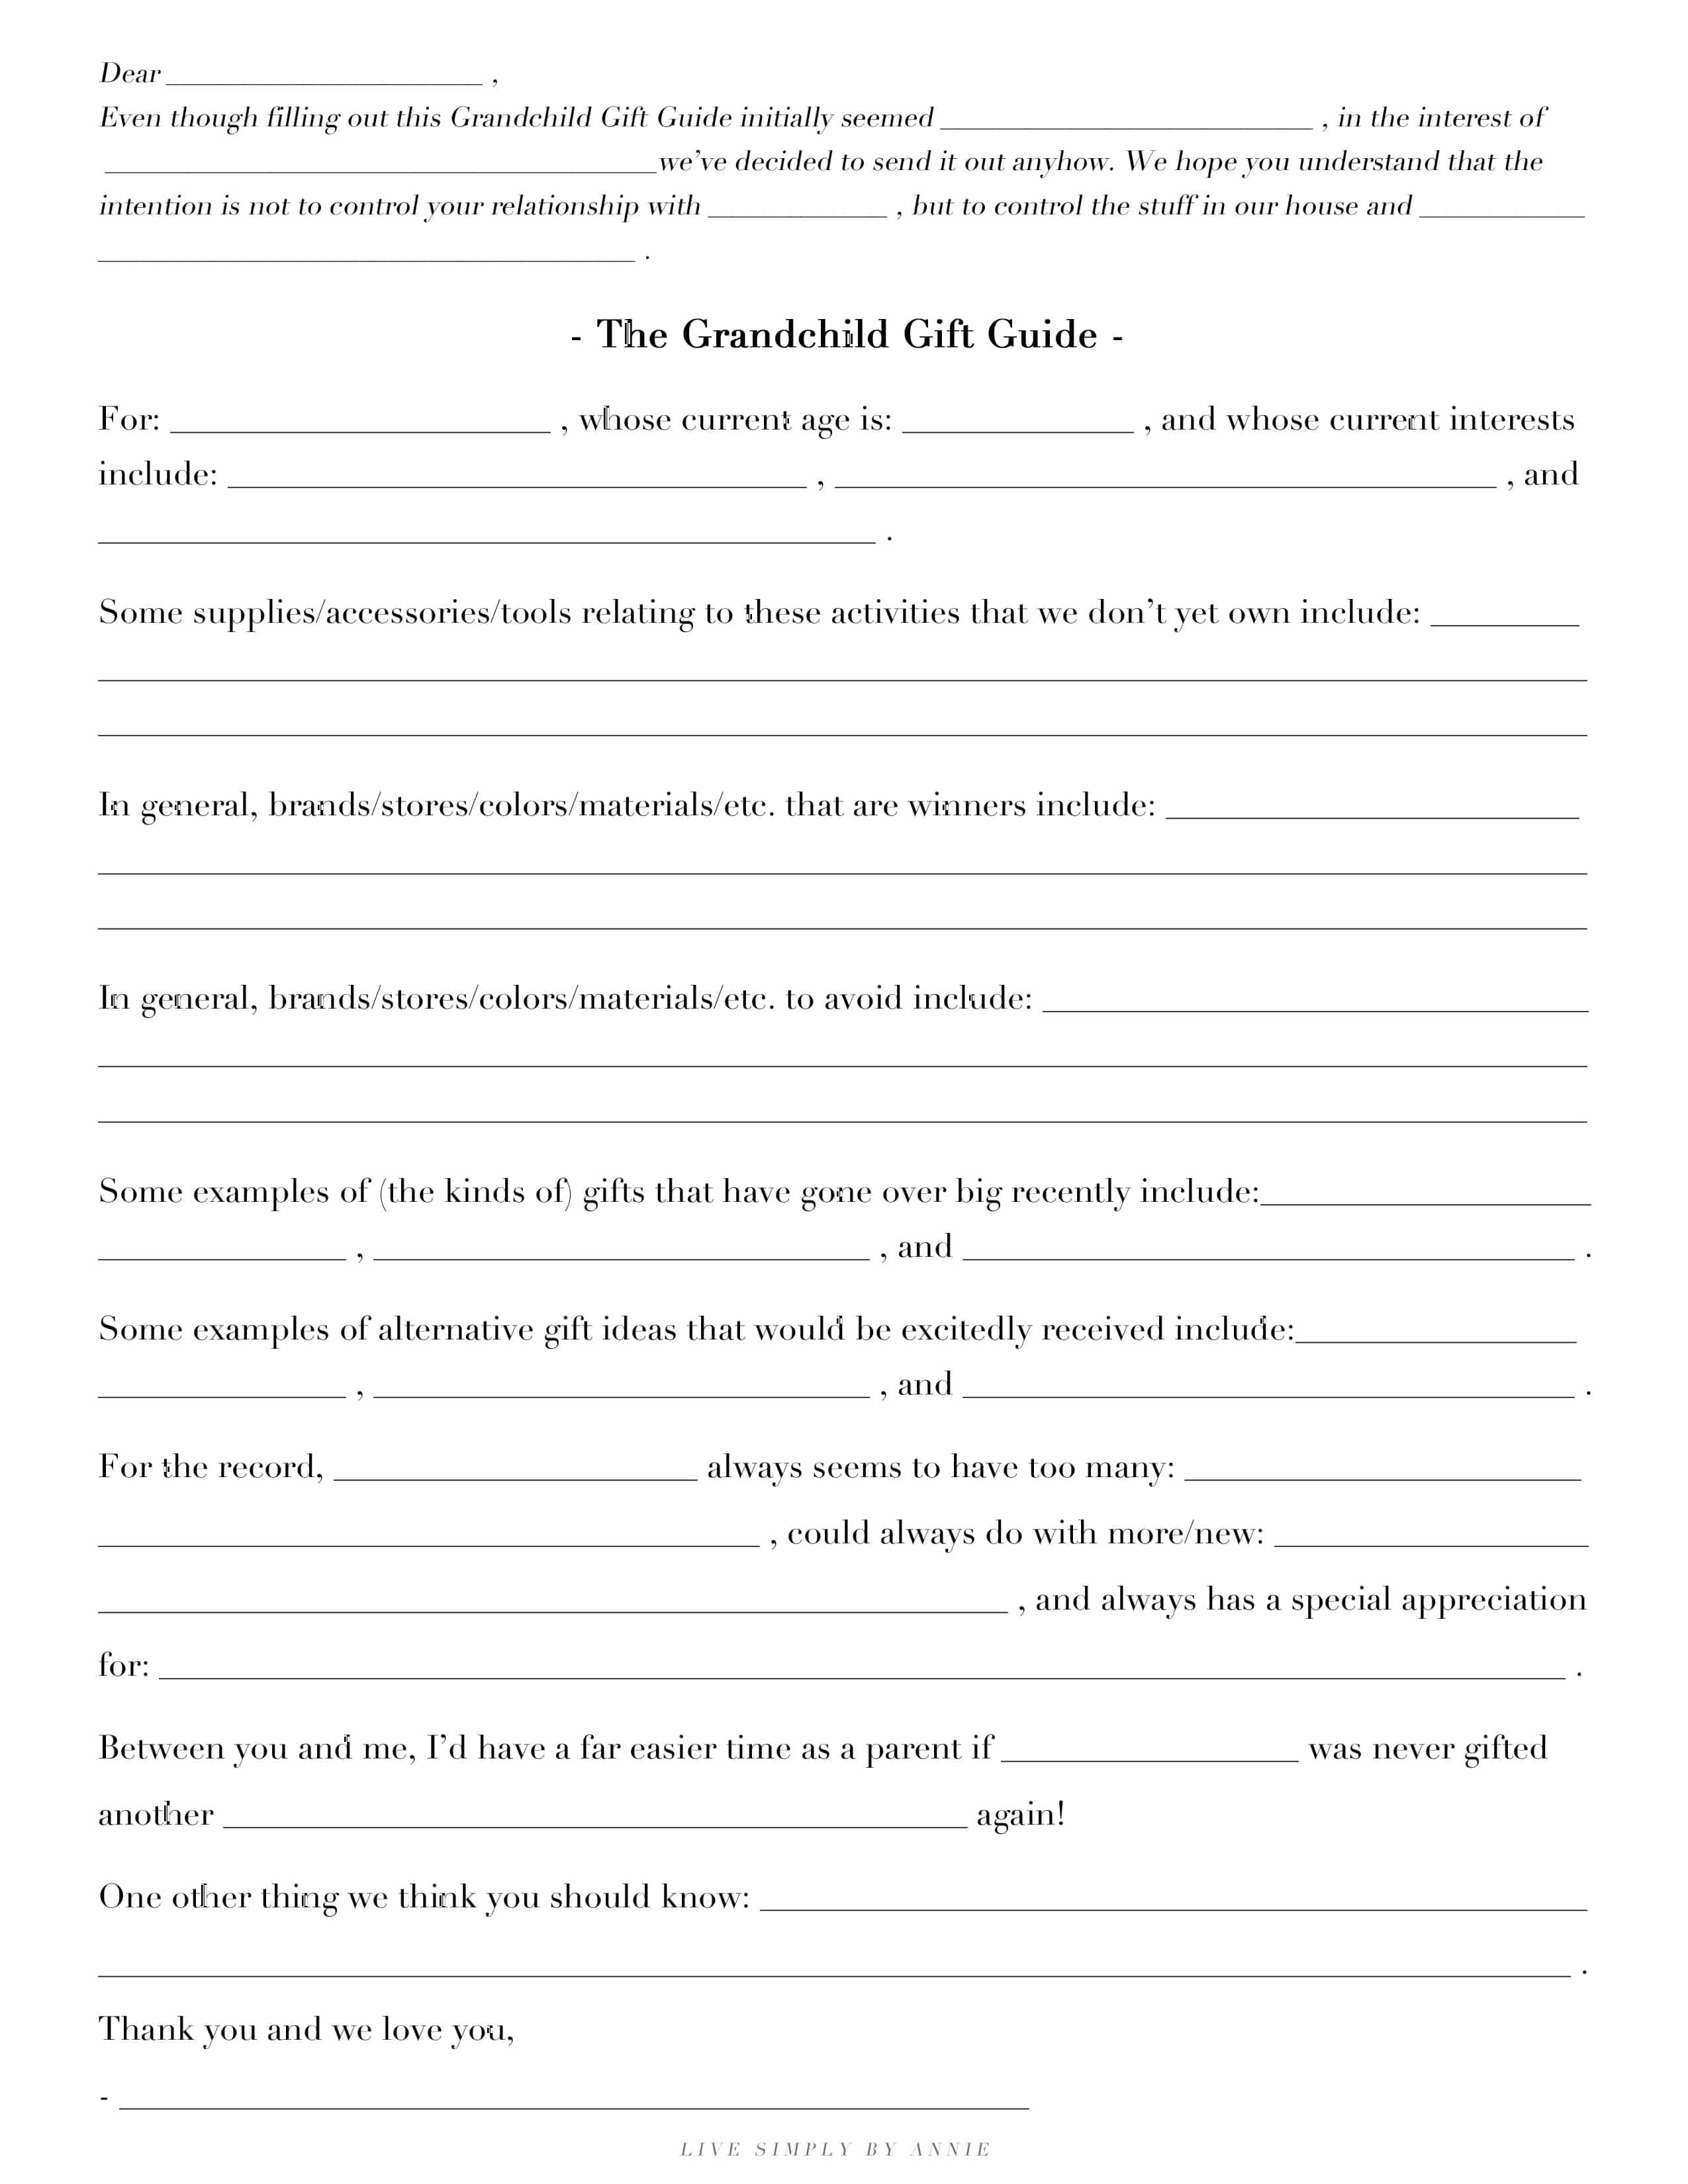 The-Grandchild-Gift-Guide_edited-1